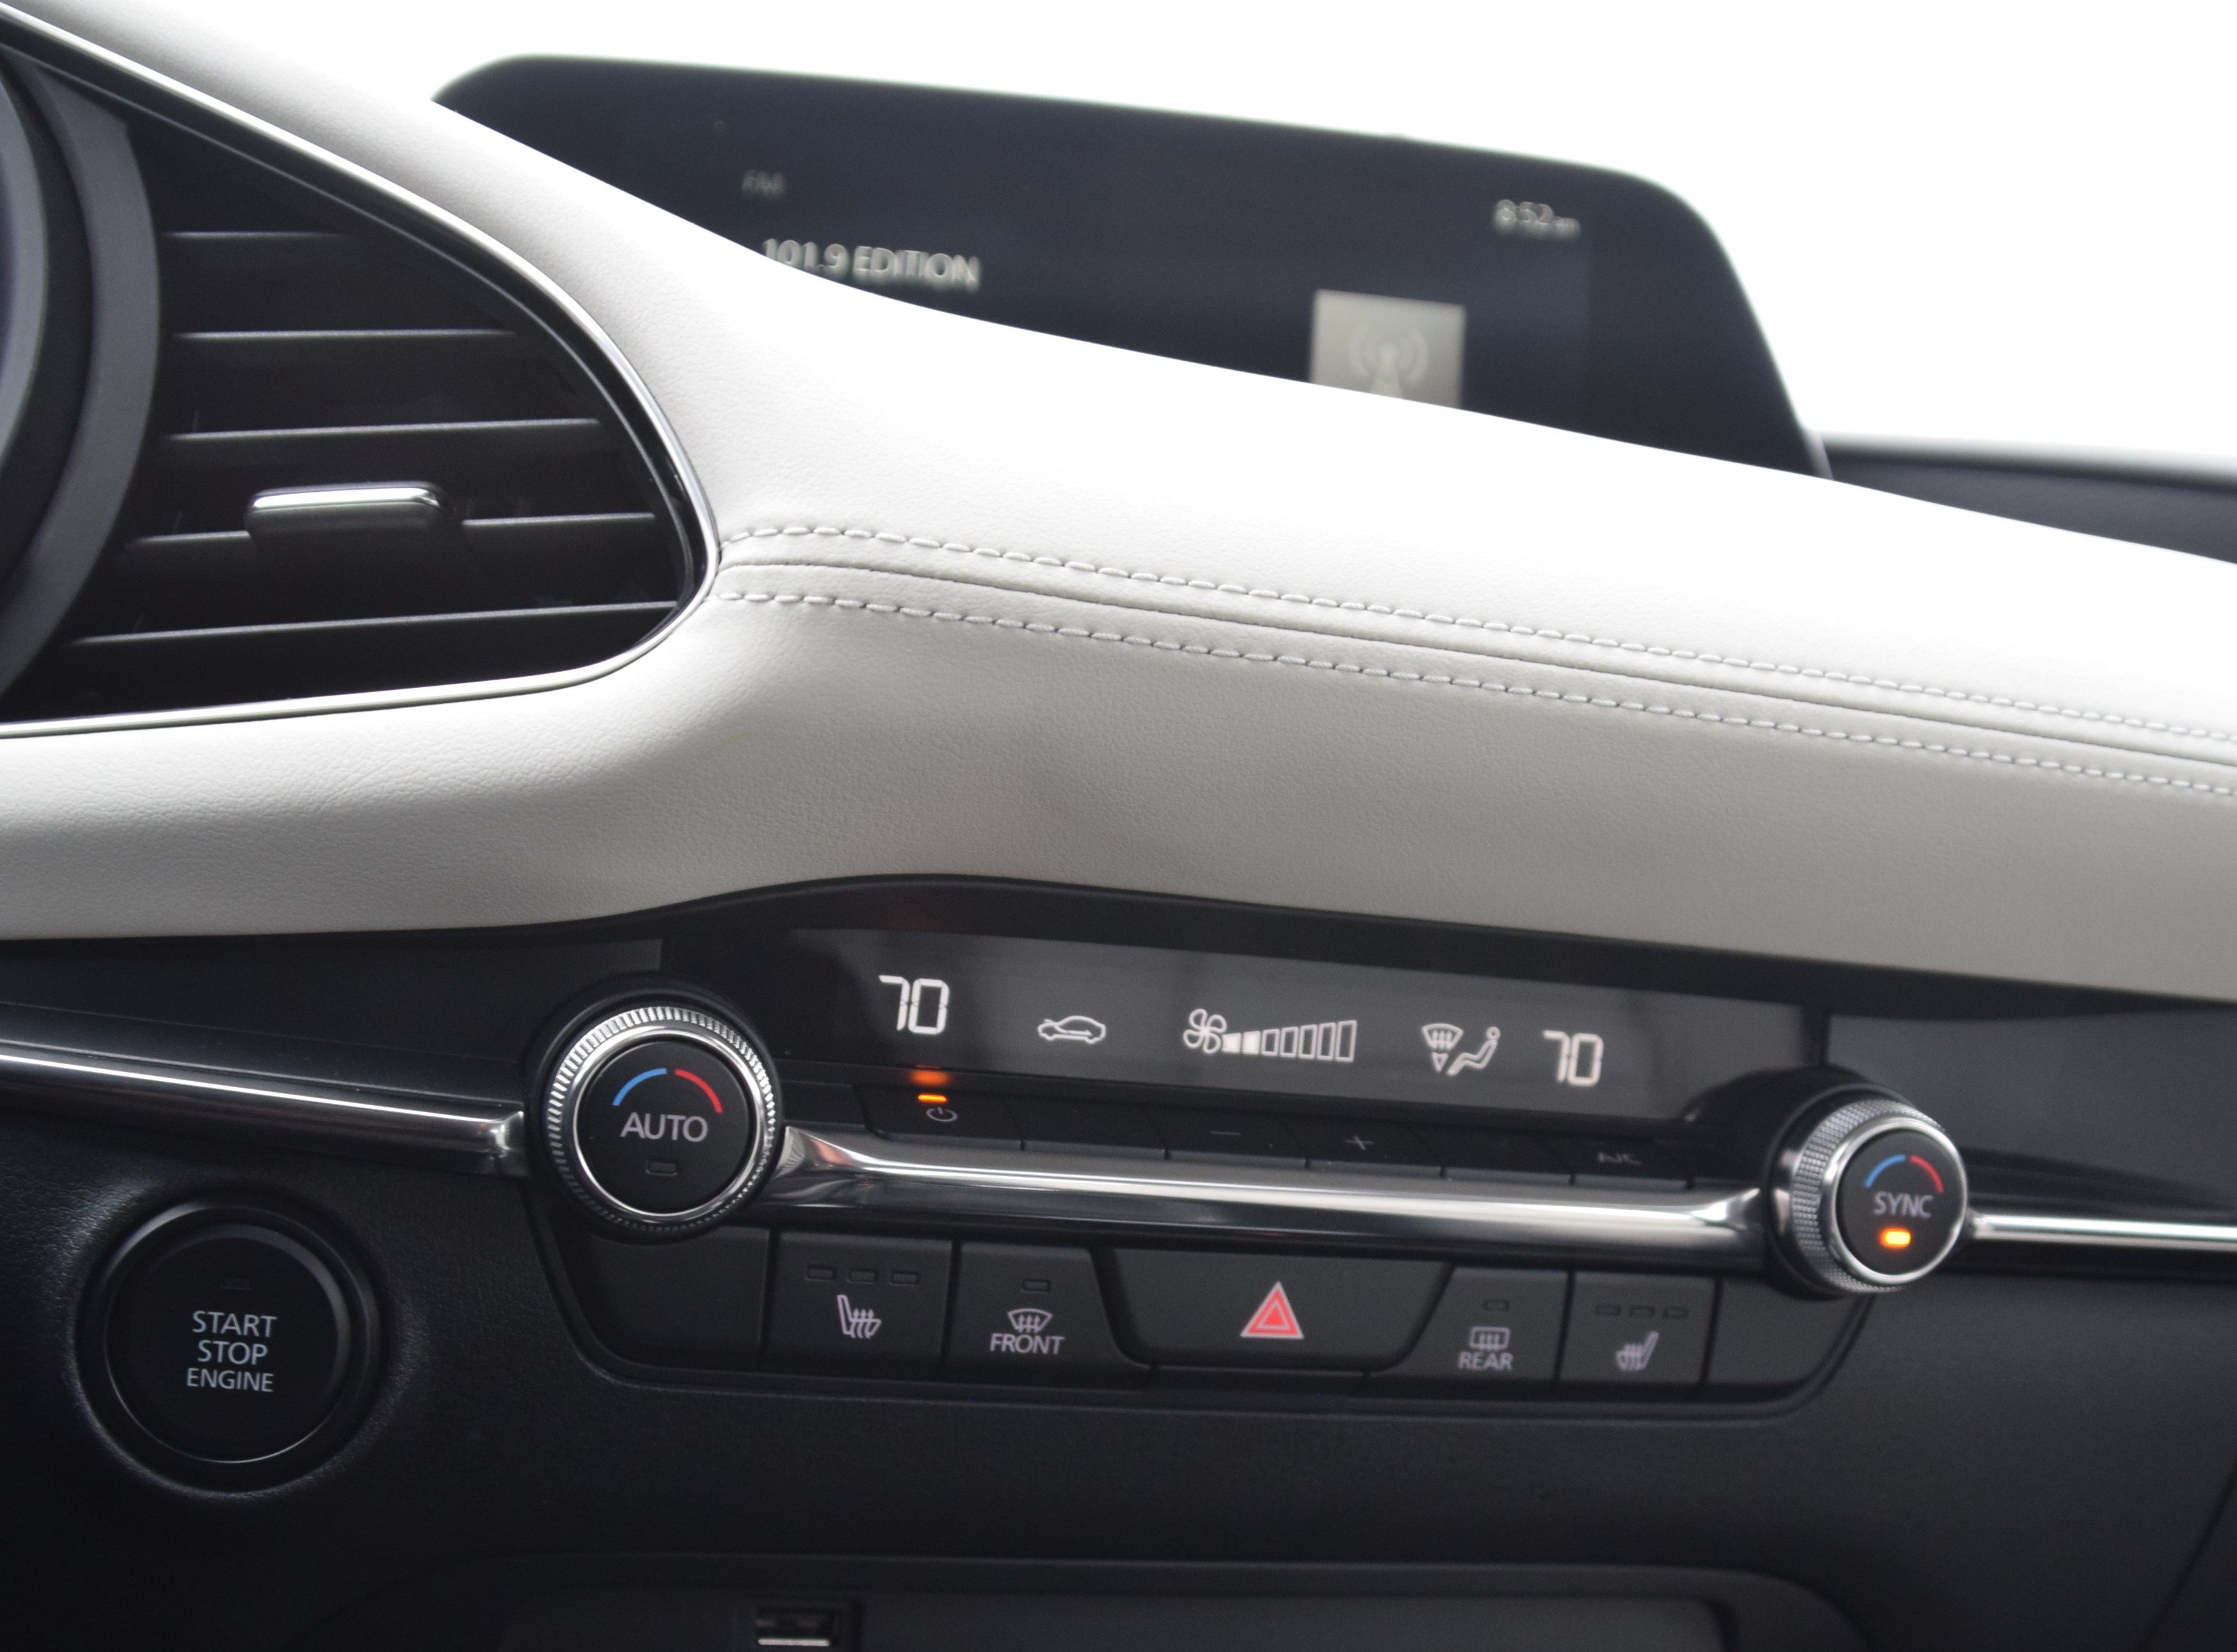 Mazda3 hvac controls - Copy.JPG